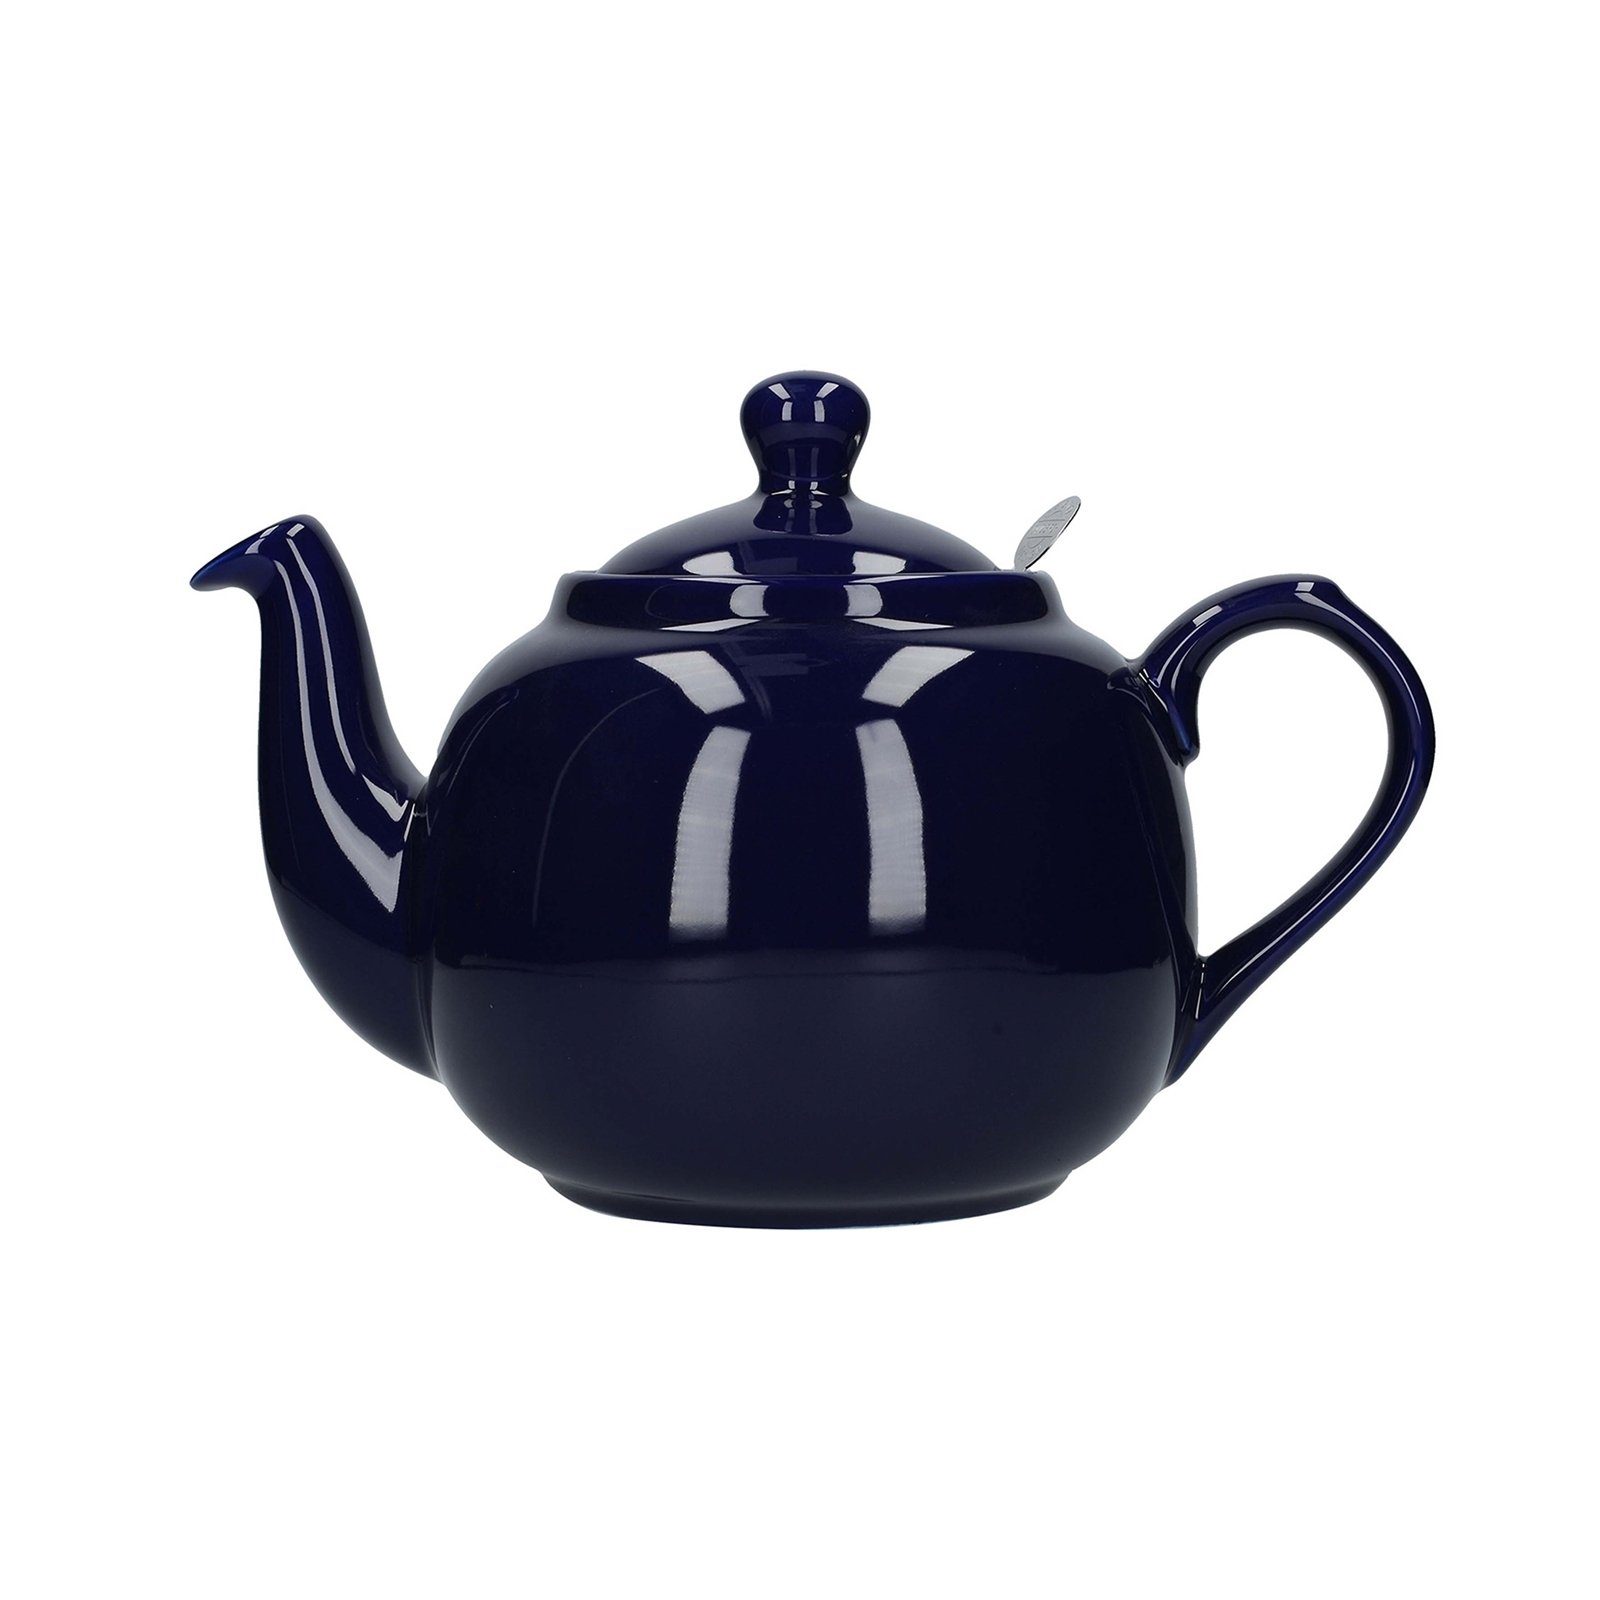 Neuetischkultur Teekanne Teekanne mit Sieb 6 Tassen, Keramik, 1,5 L, 1.5 l Kobaltblau